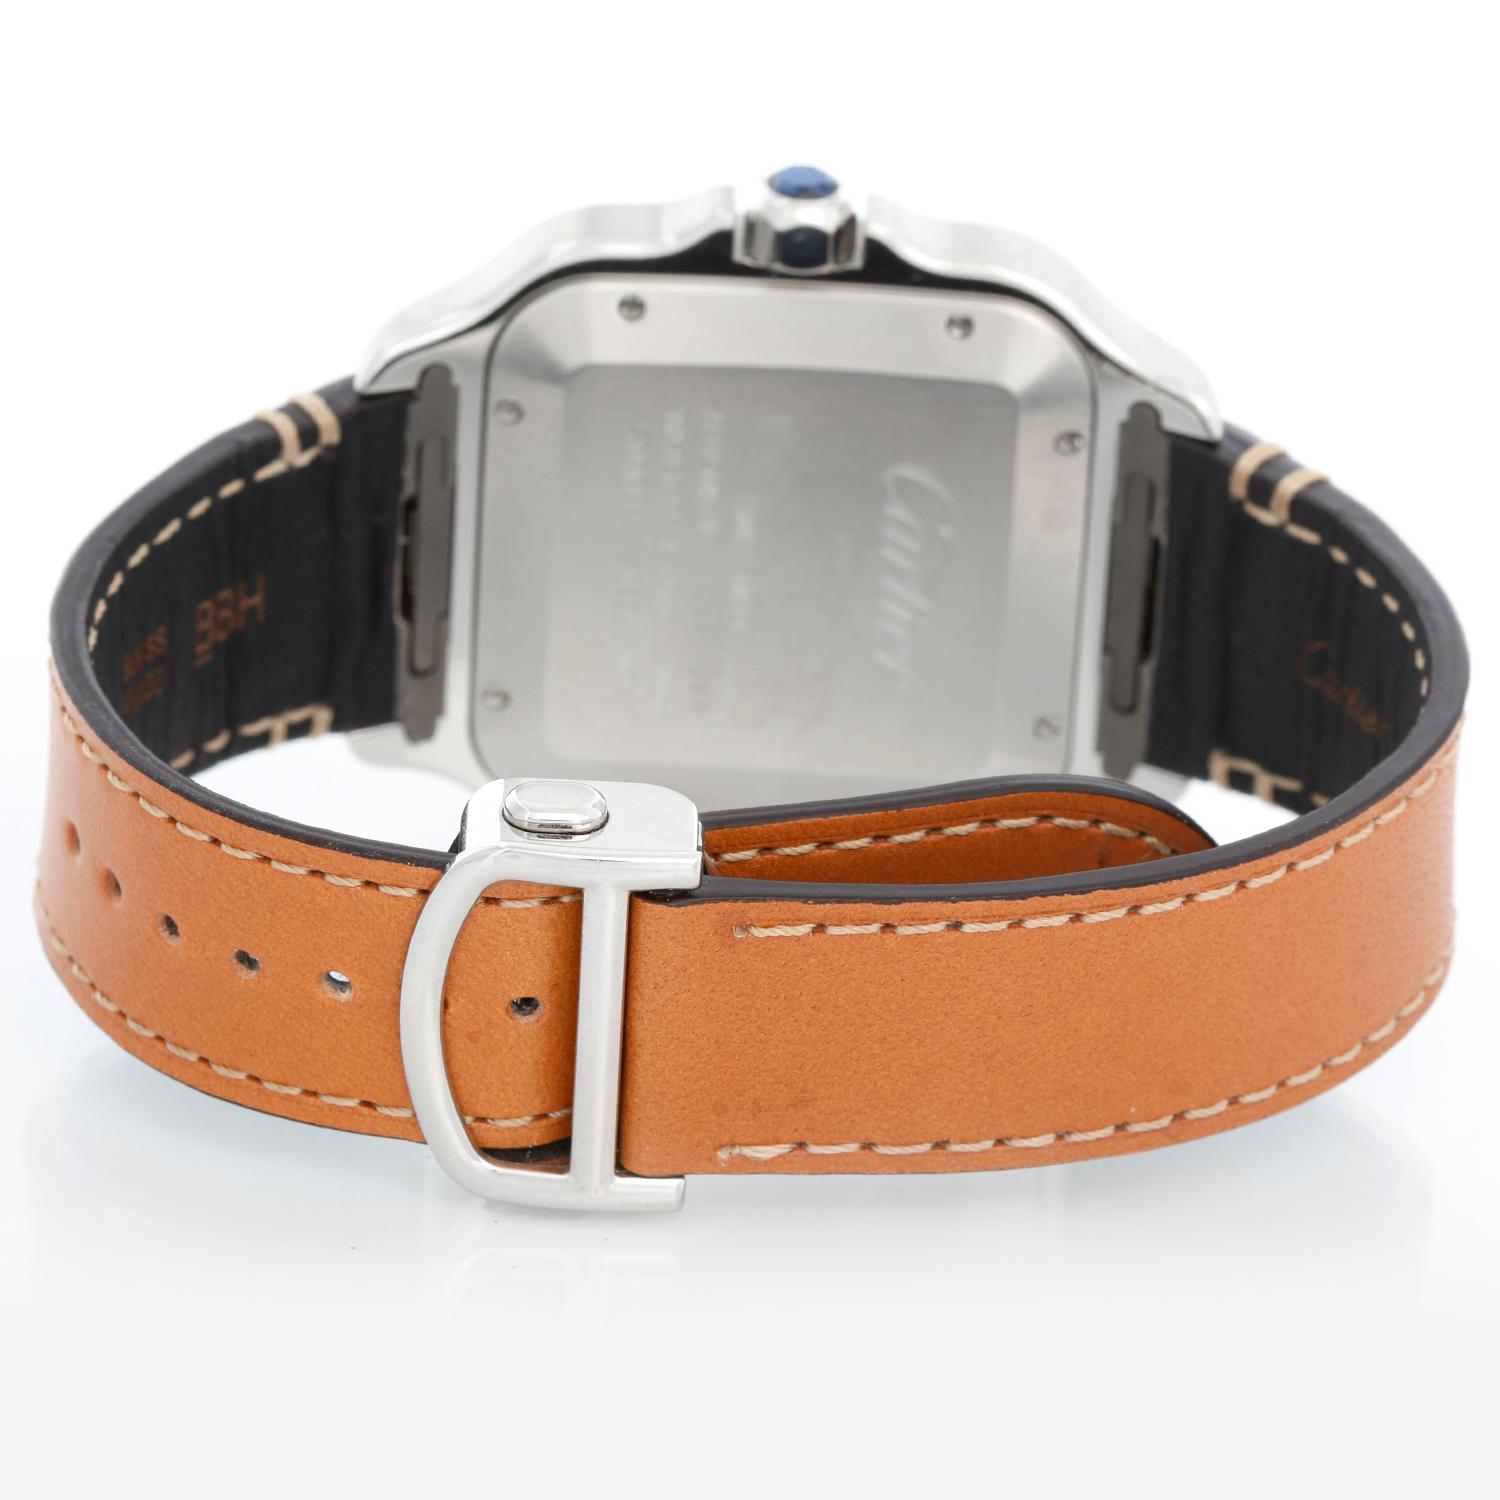 Cartier Santos Large Men's Stainless Steel Watch WSSA0018 4072 3